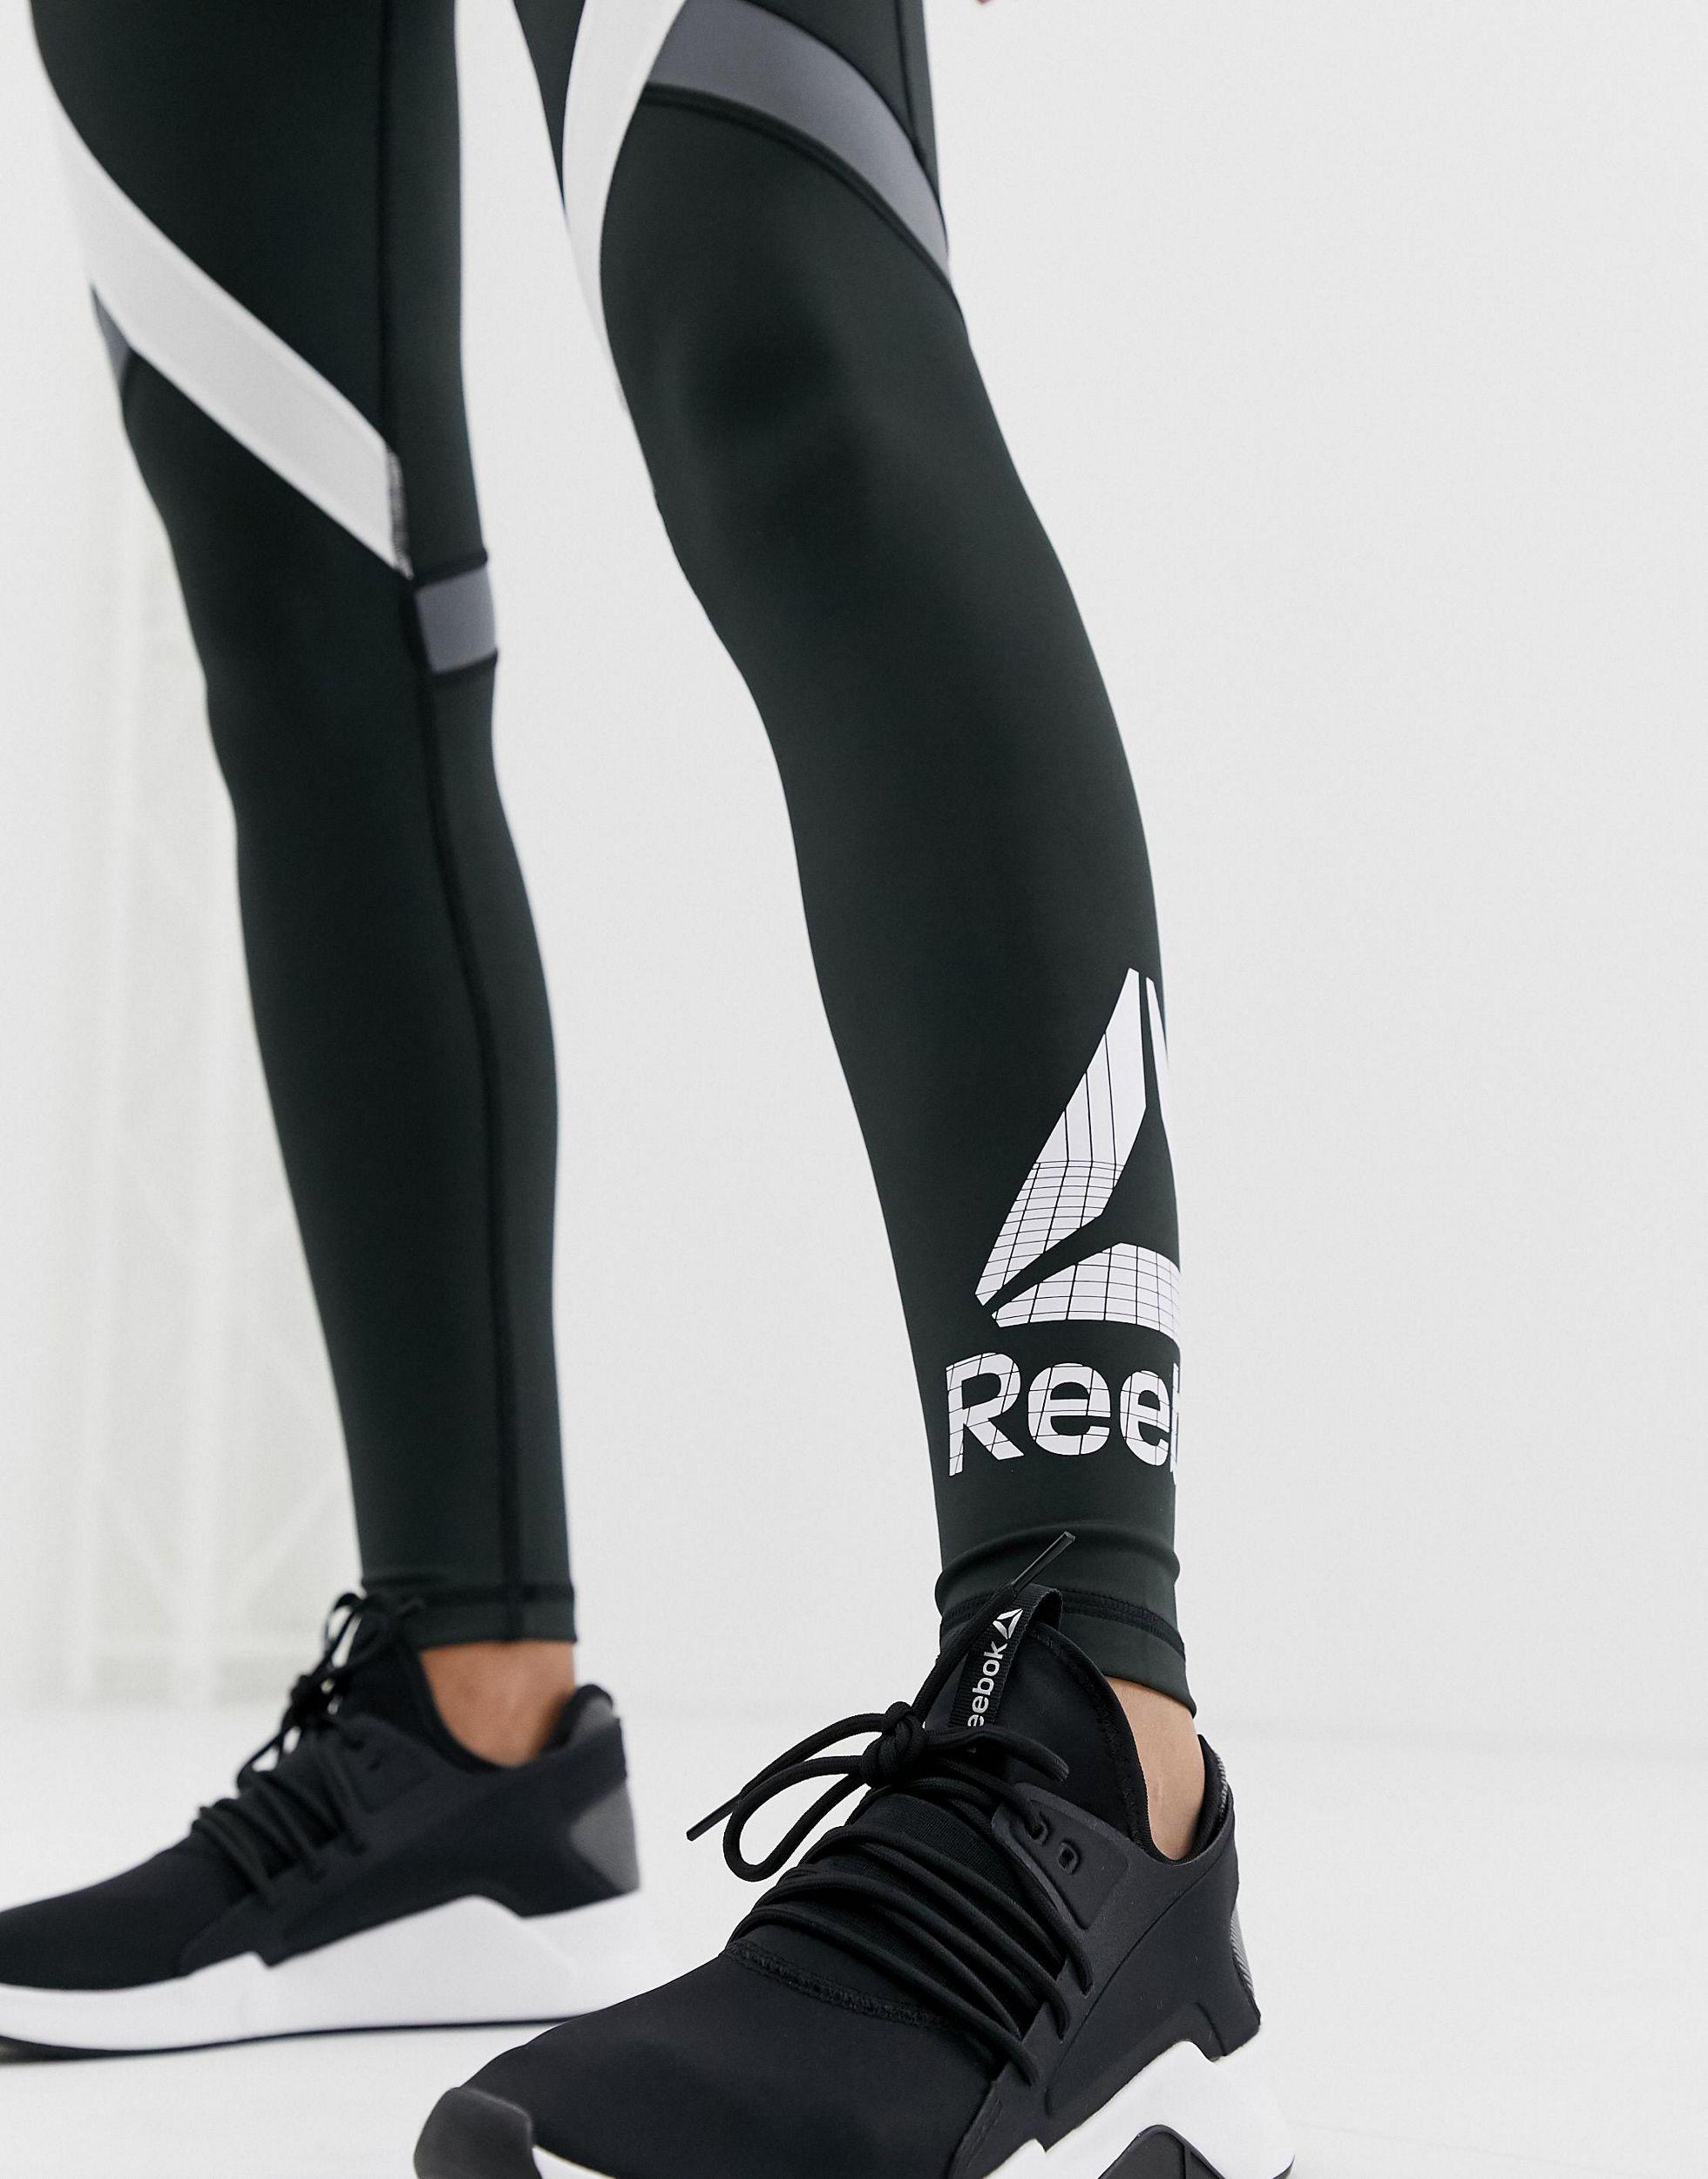 reebok training logo leggings in black and white